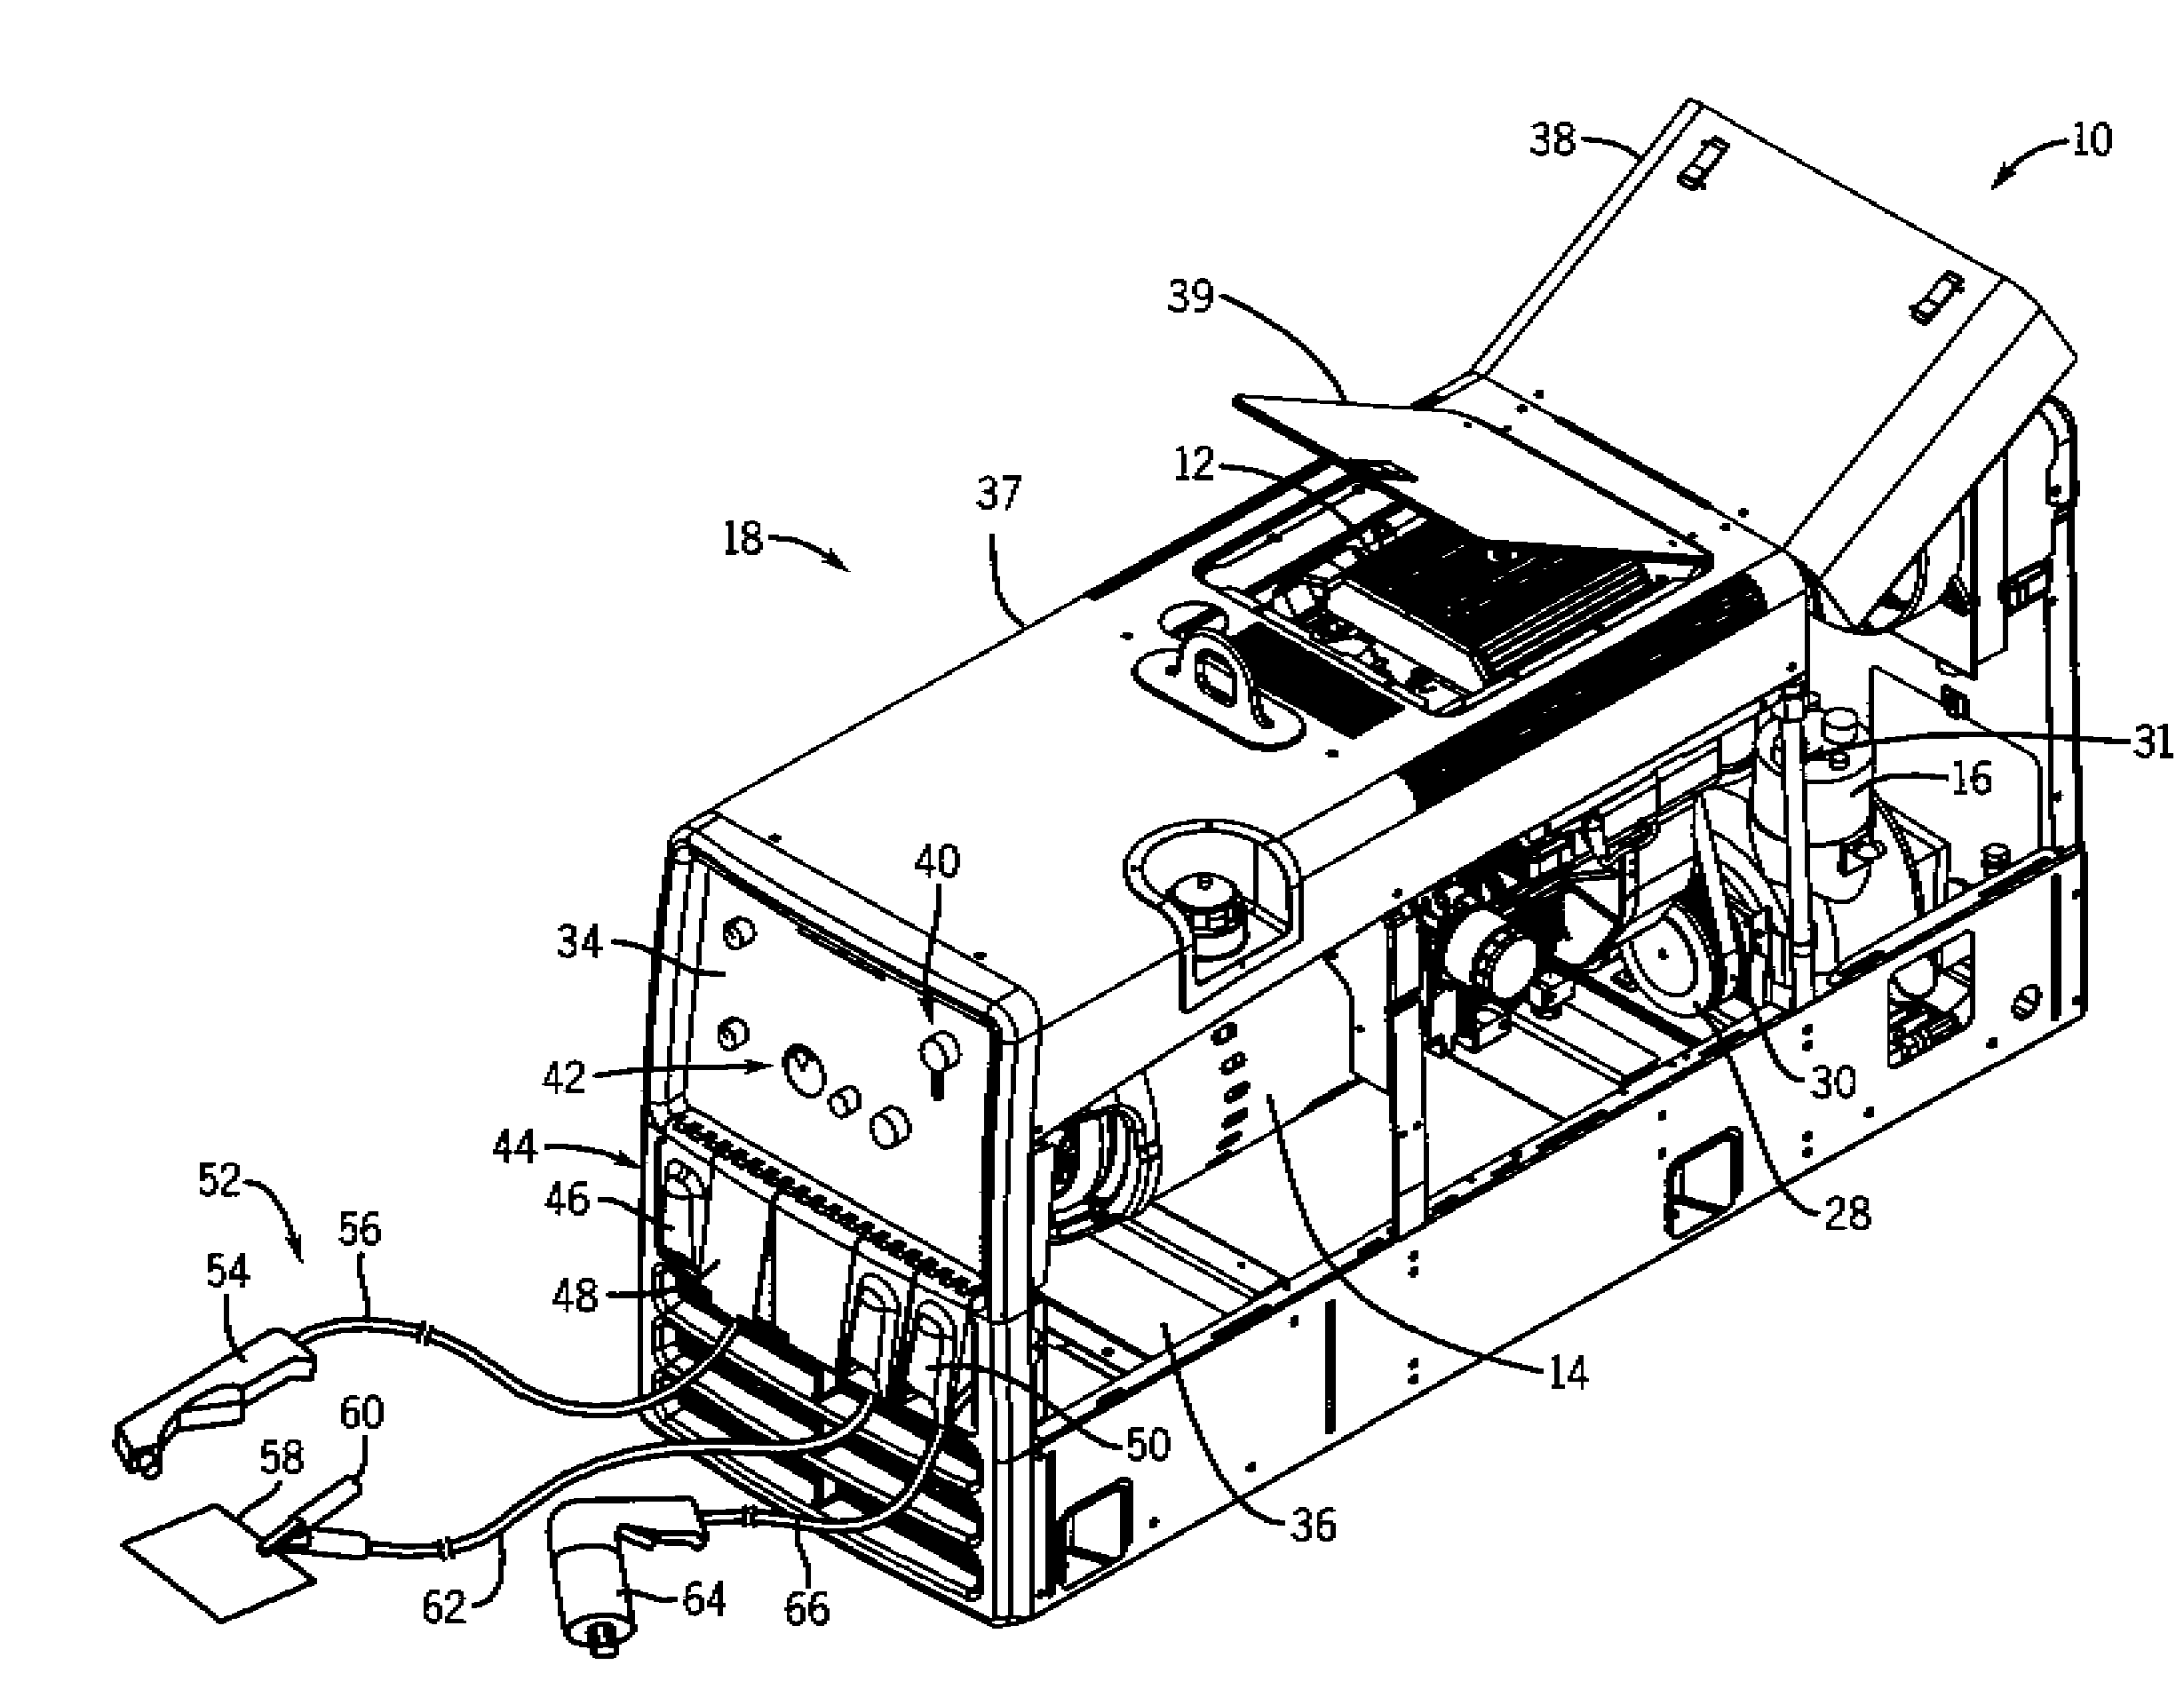 Portable Generator and Air Compressor Mounting Arrangement